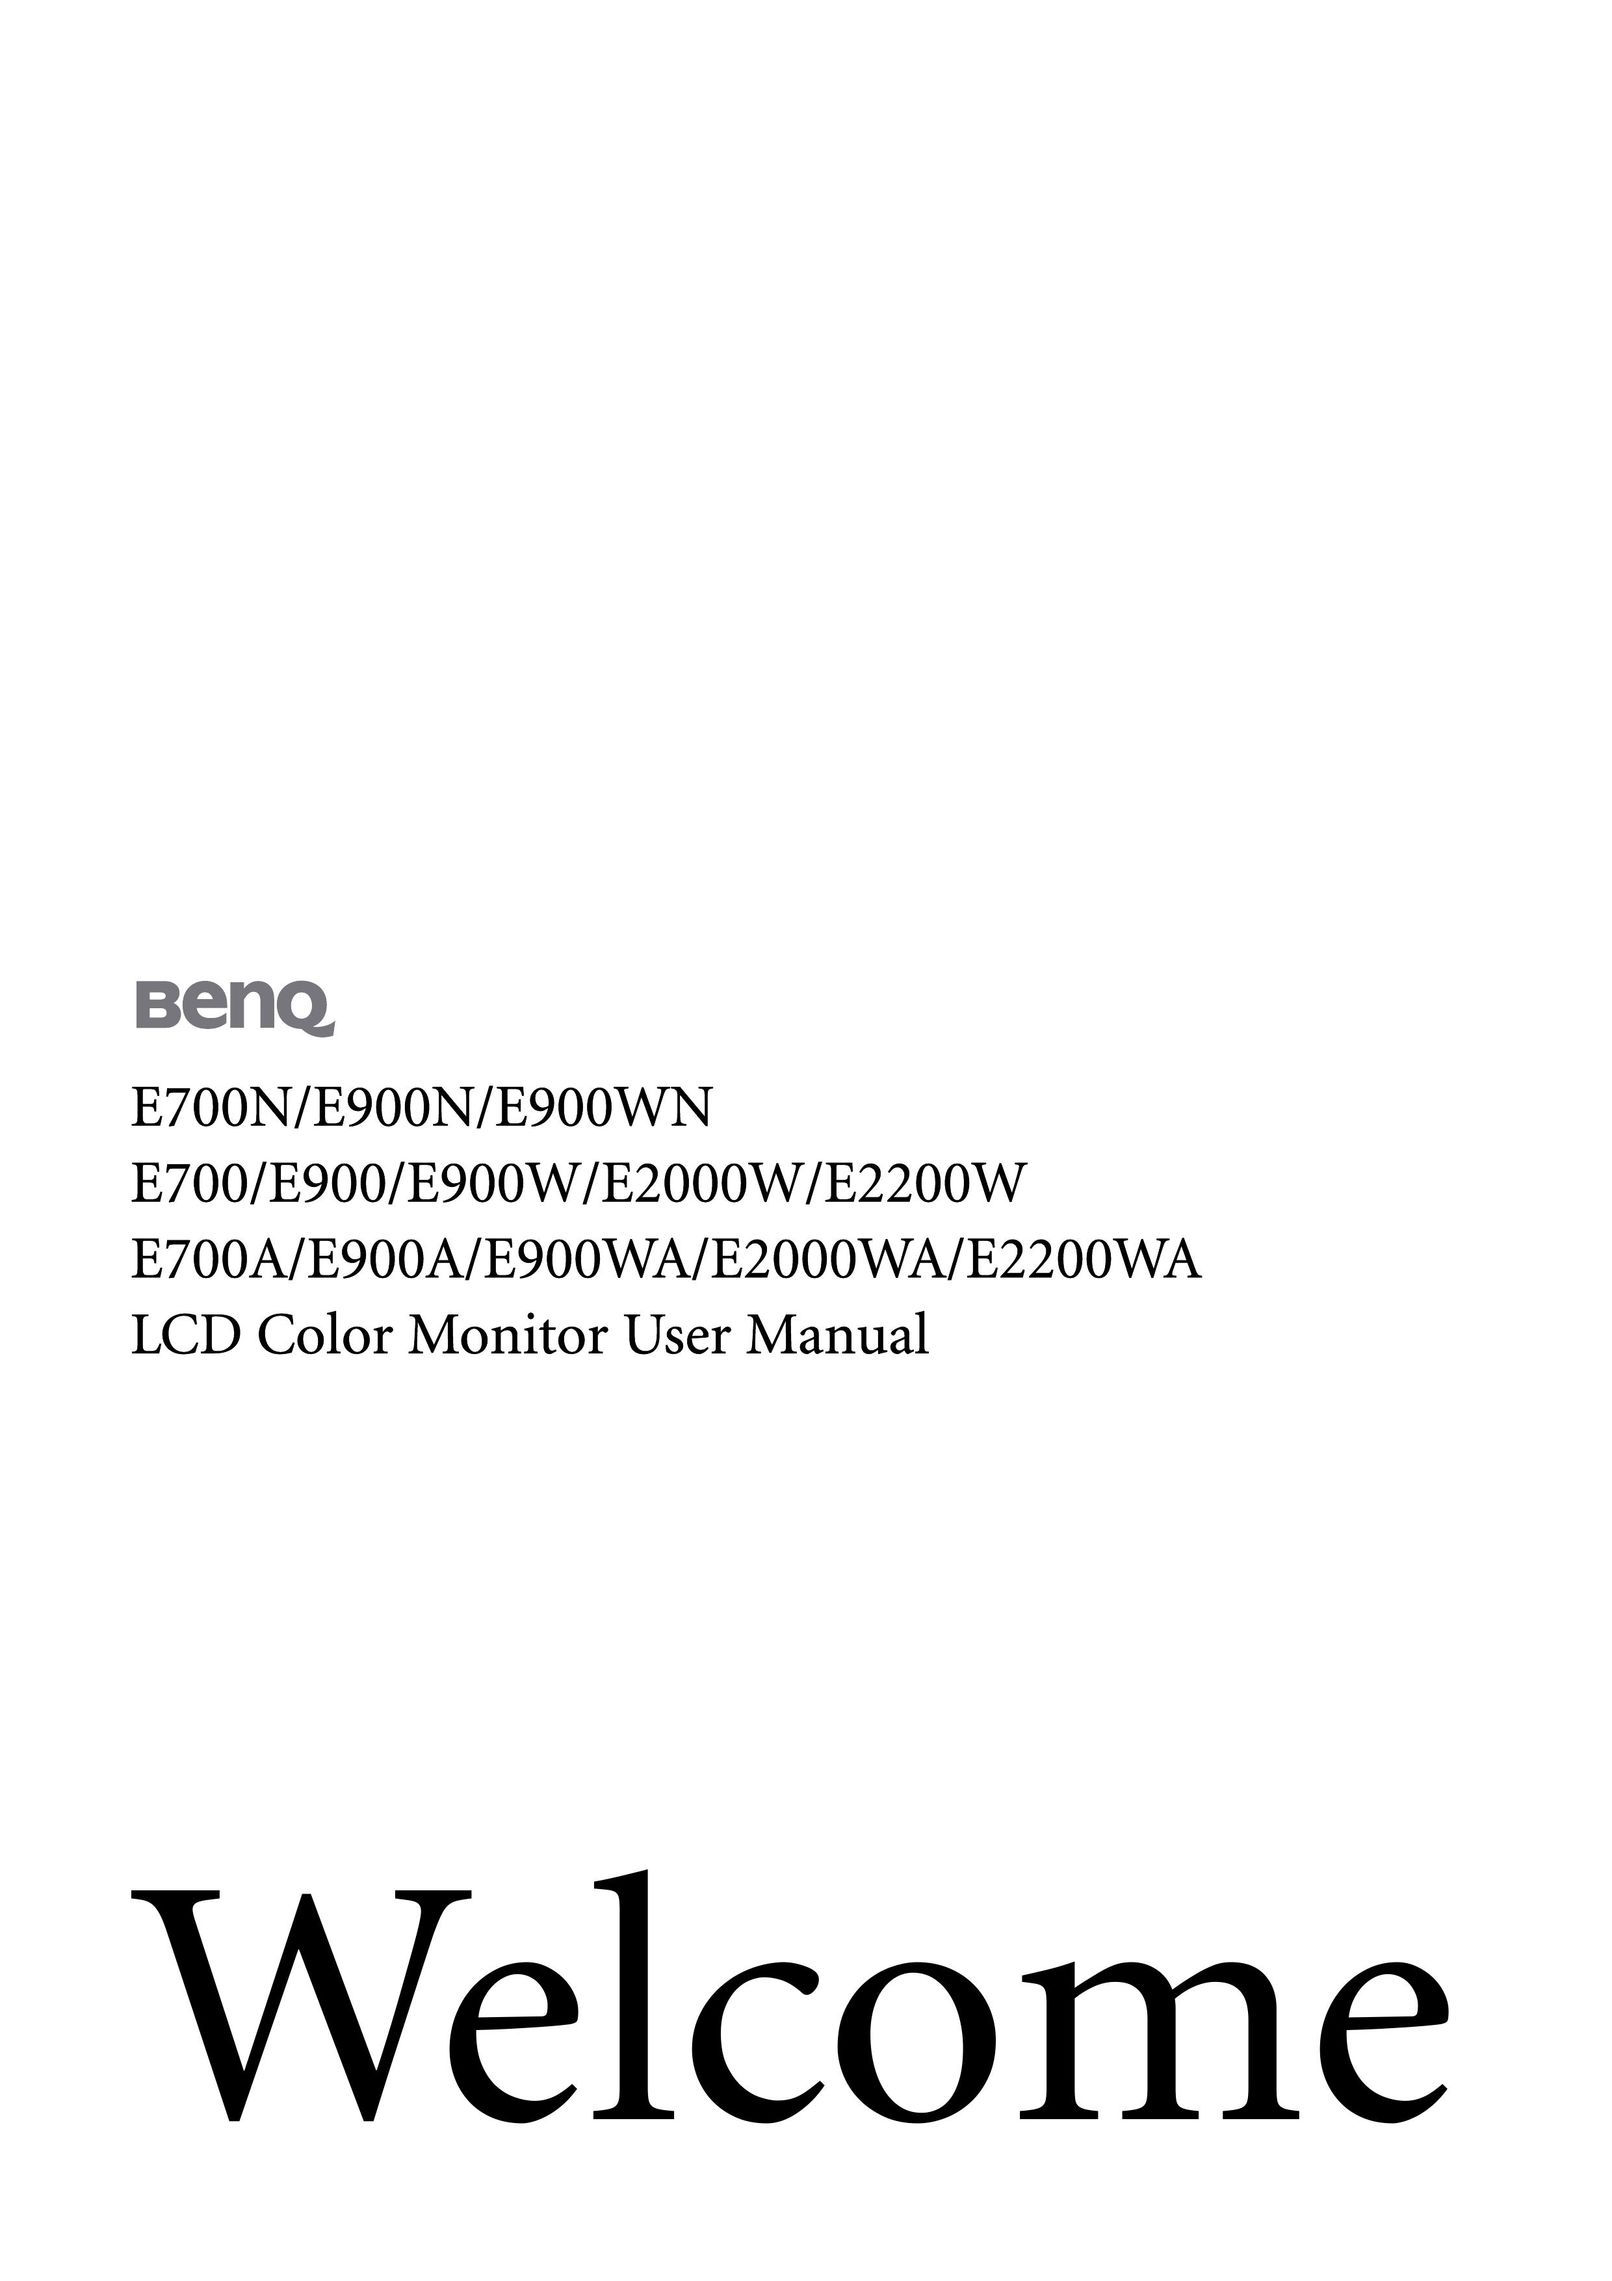 BenQ E900WN Computer Monitor User Manual (Page 1)